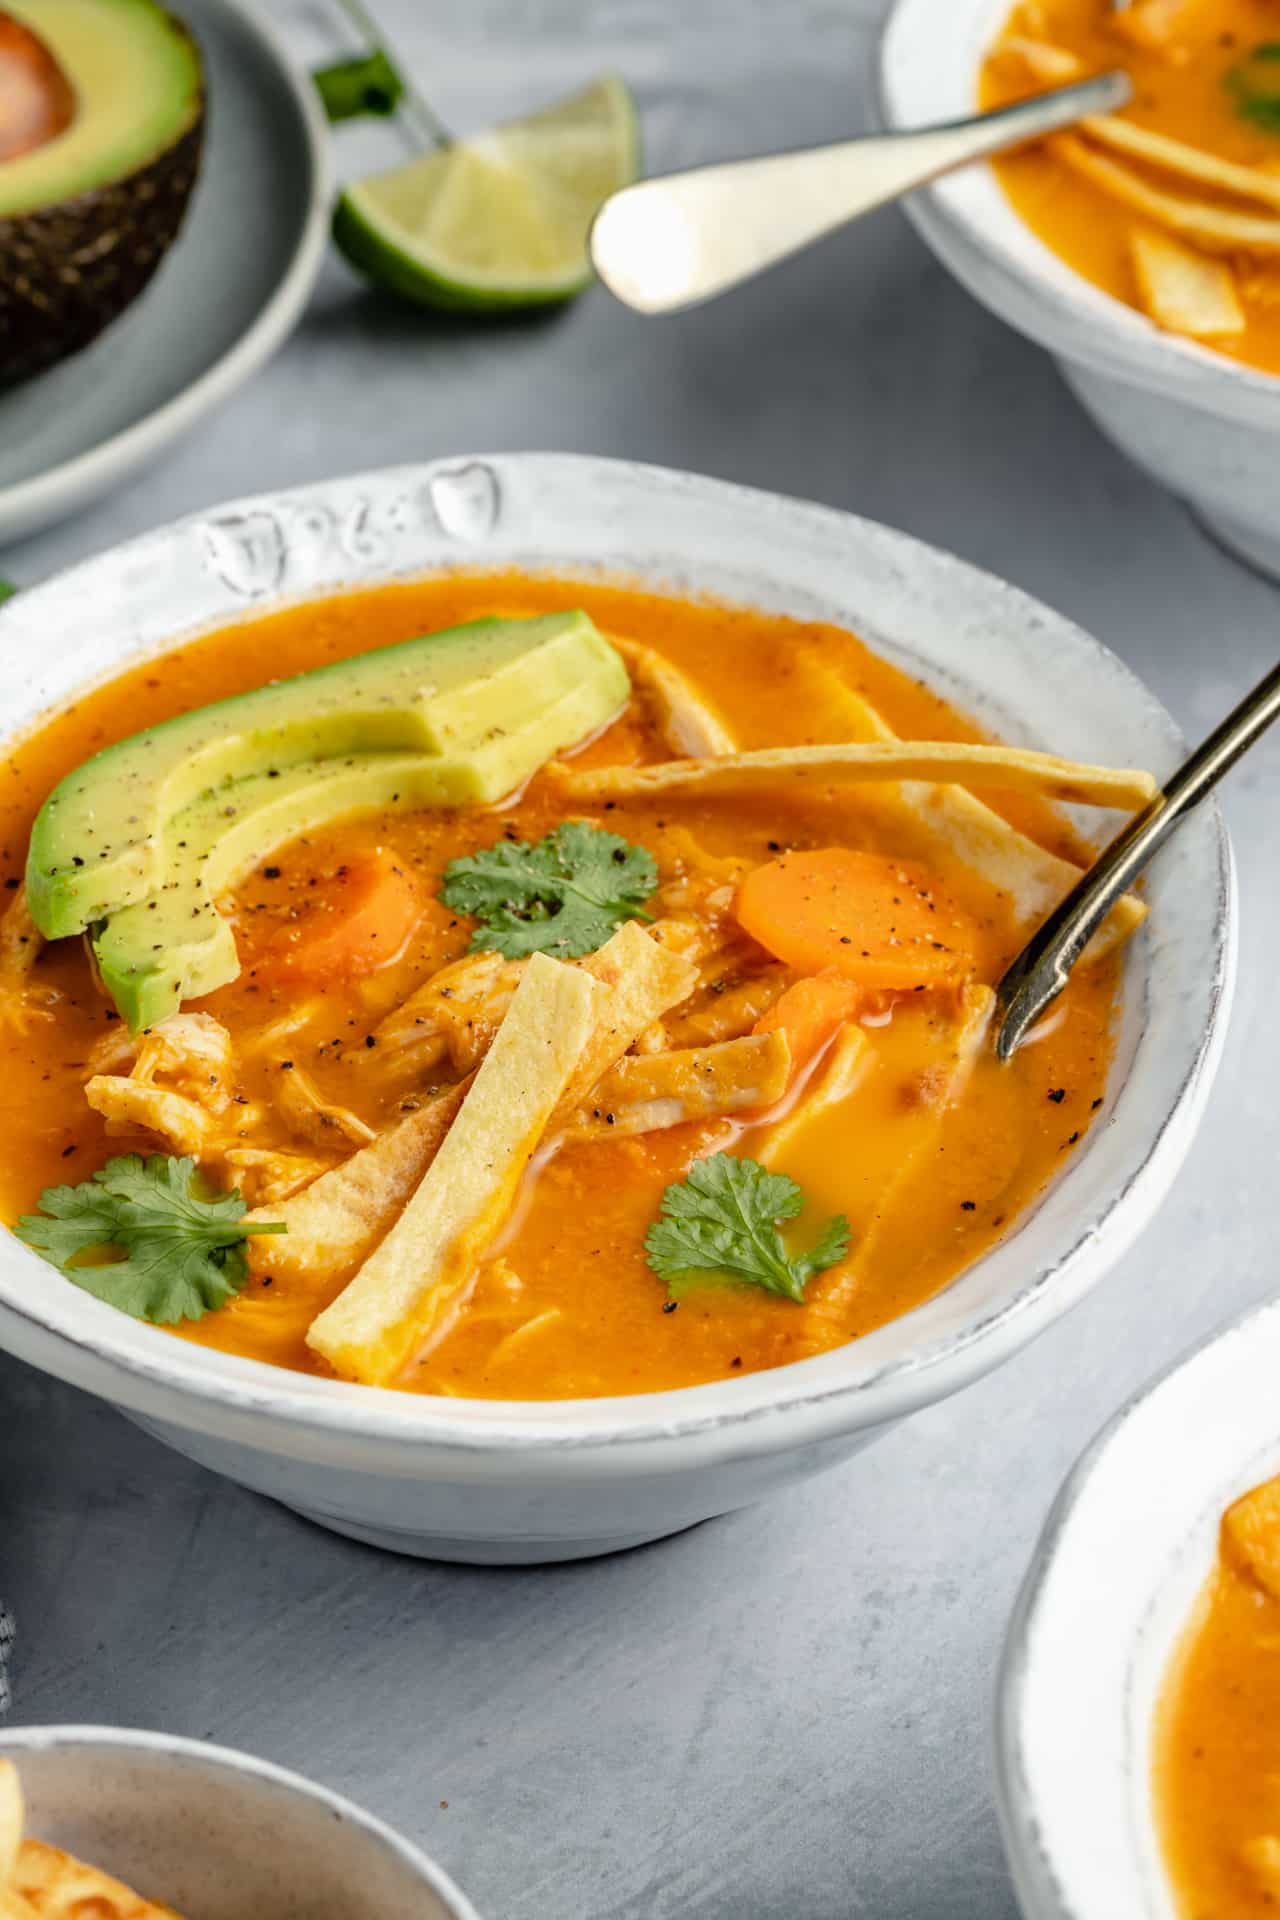 https://www.kimscravings.com/wp-content/uploads/2015/08/Healthy-Tortilla-Soup-7.jpg